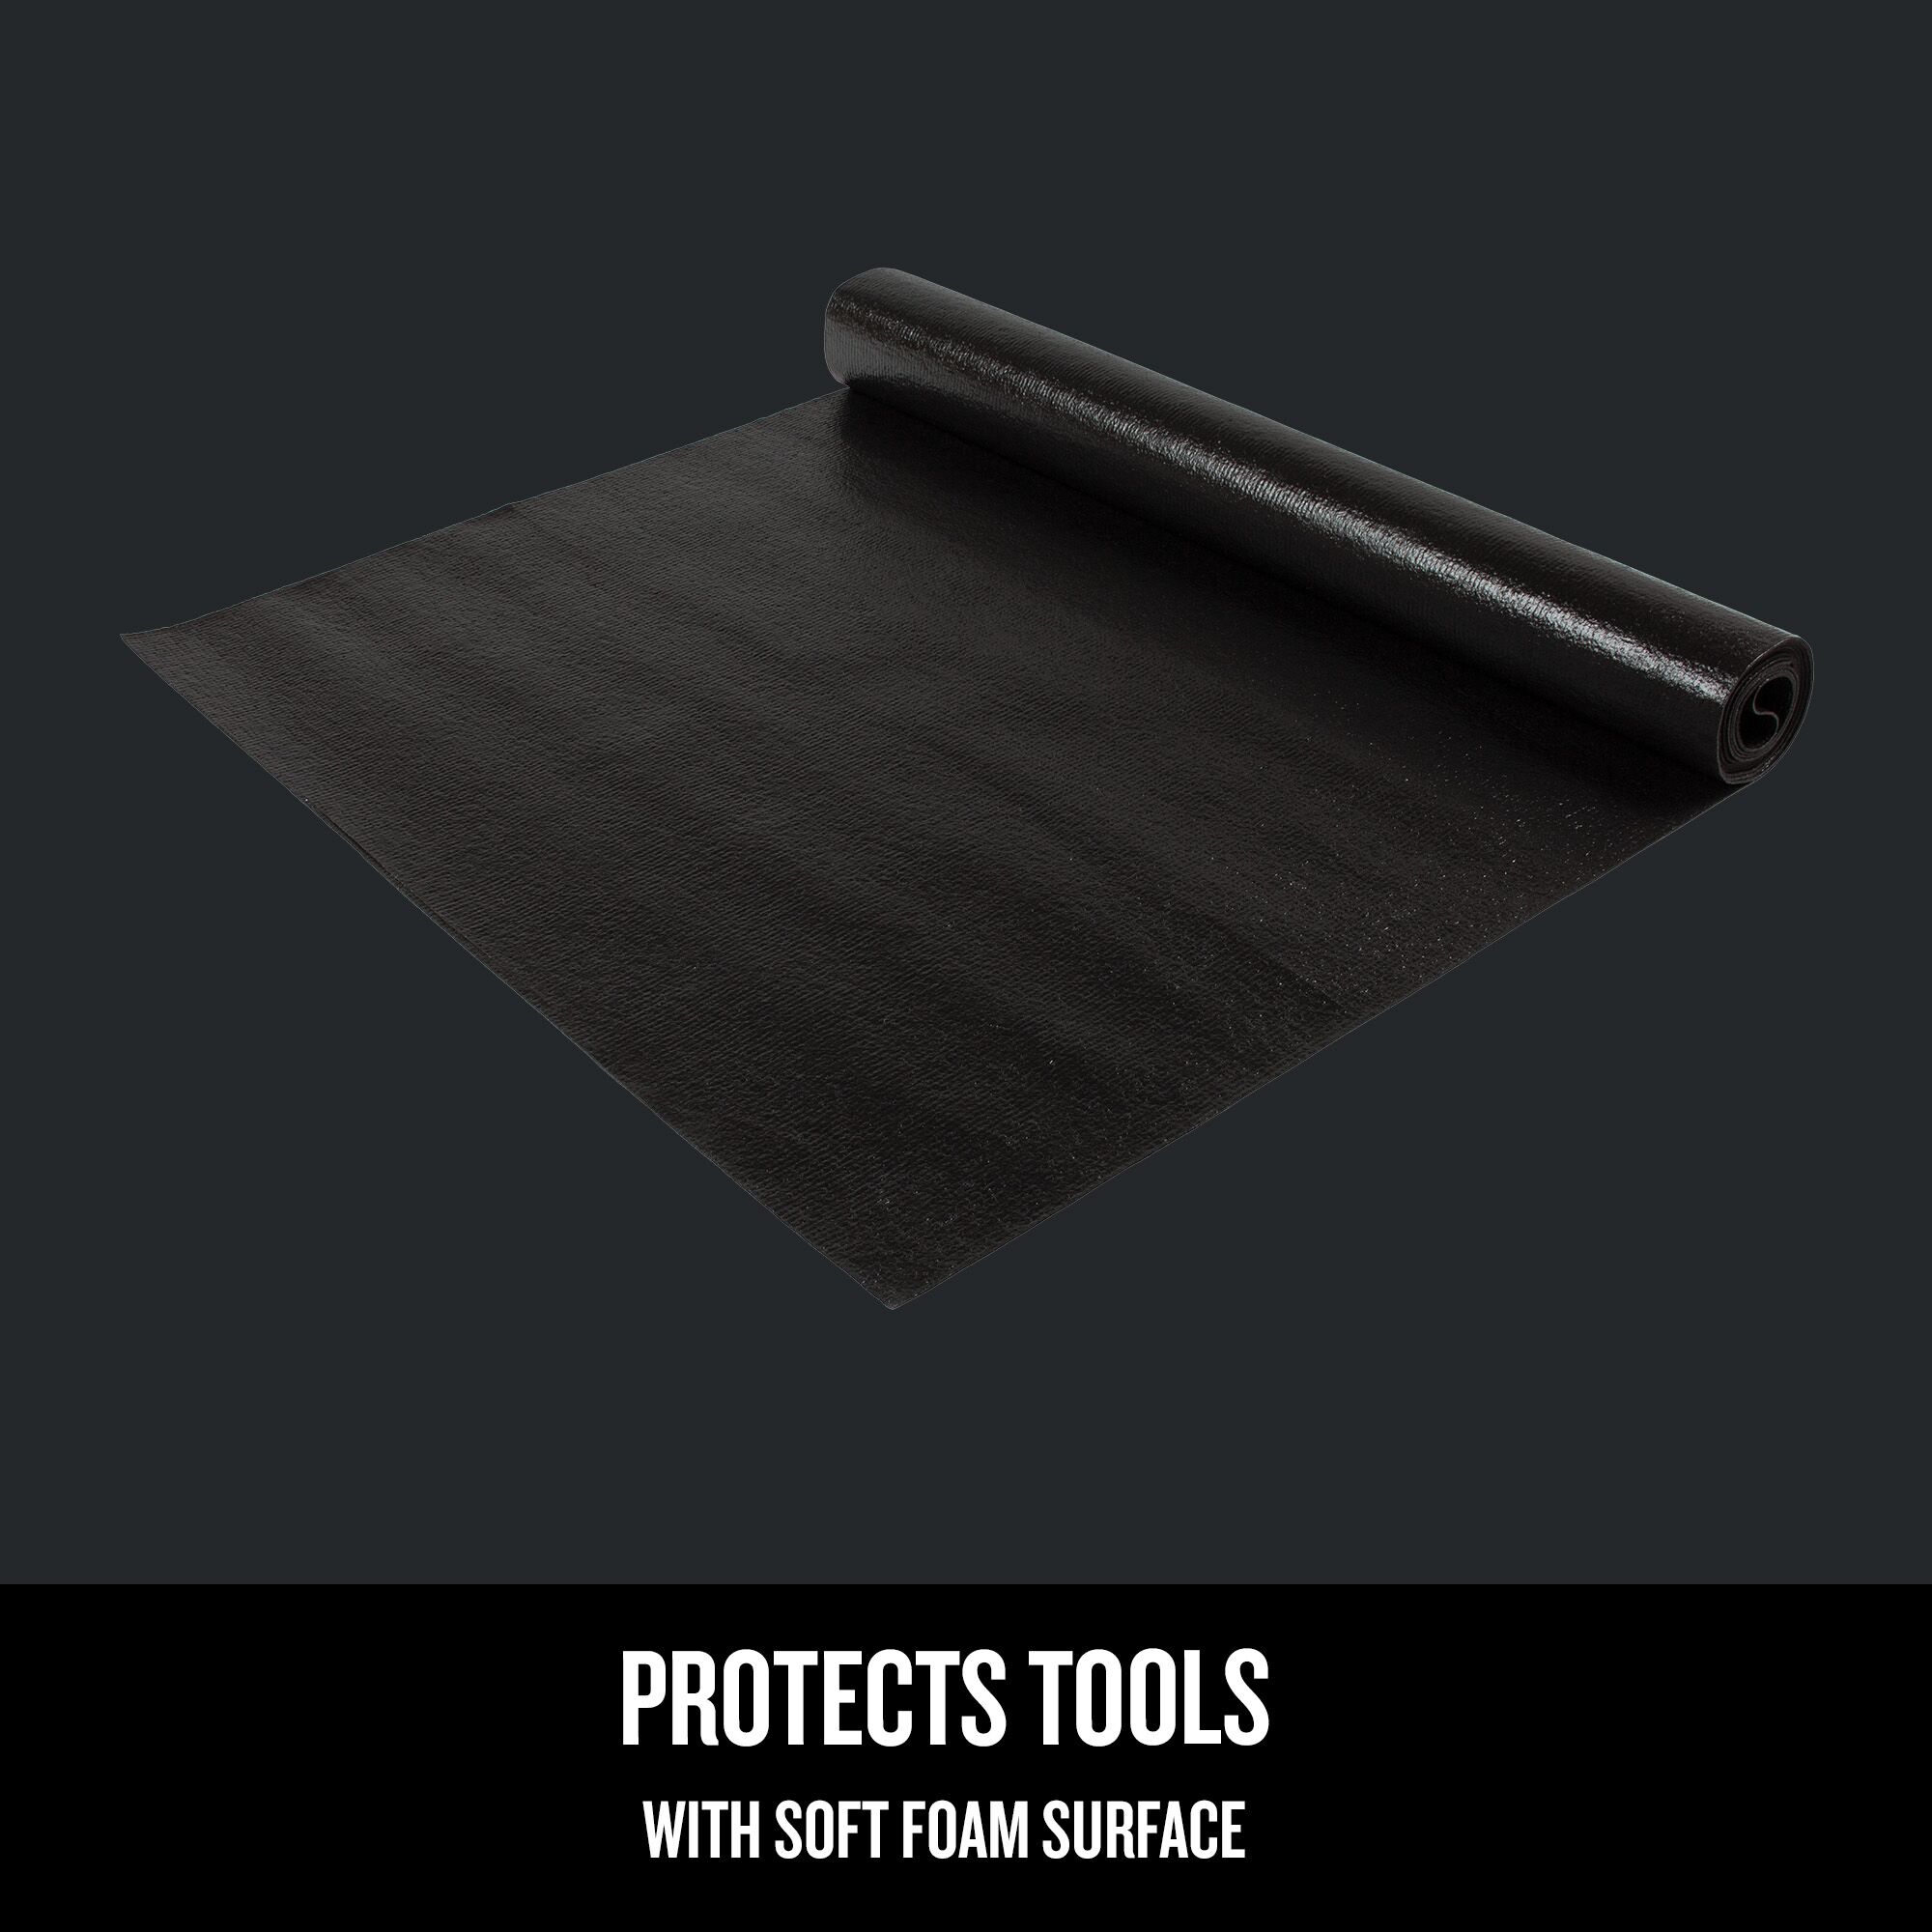 1 Roll Kitchen Drawer Liner Clear Shelf Mat Cover Non Slip Grip Tool Box 12  X30, 1 - Harris Teeter